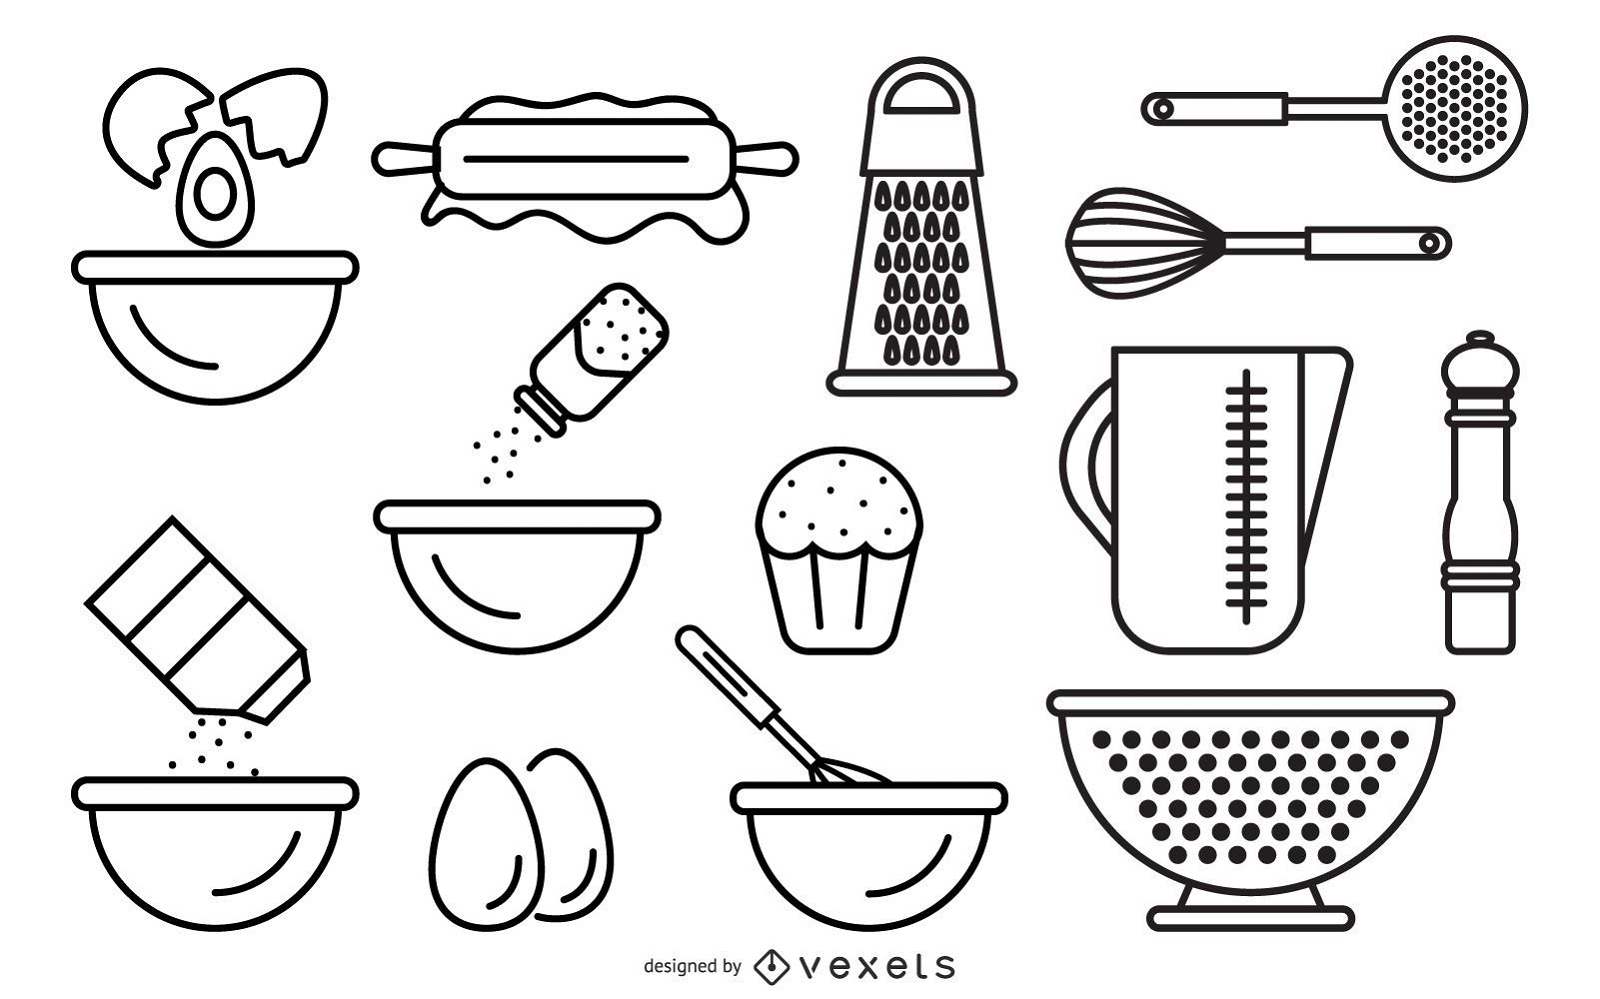 https://images.vexels.com/media/users/3/118324/raw/feeffeeeecc318886f544890572c4018-dibujo-lineal-de-vector-de-utensilios-de-cocina-y-alimentos.jpg